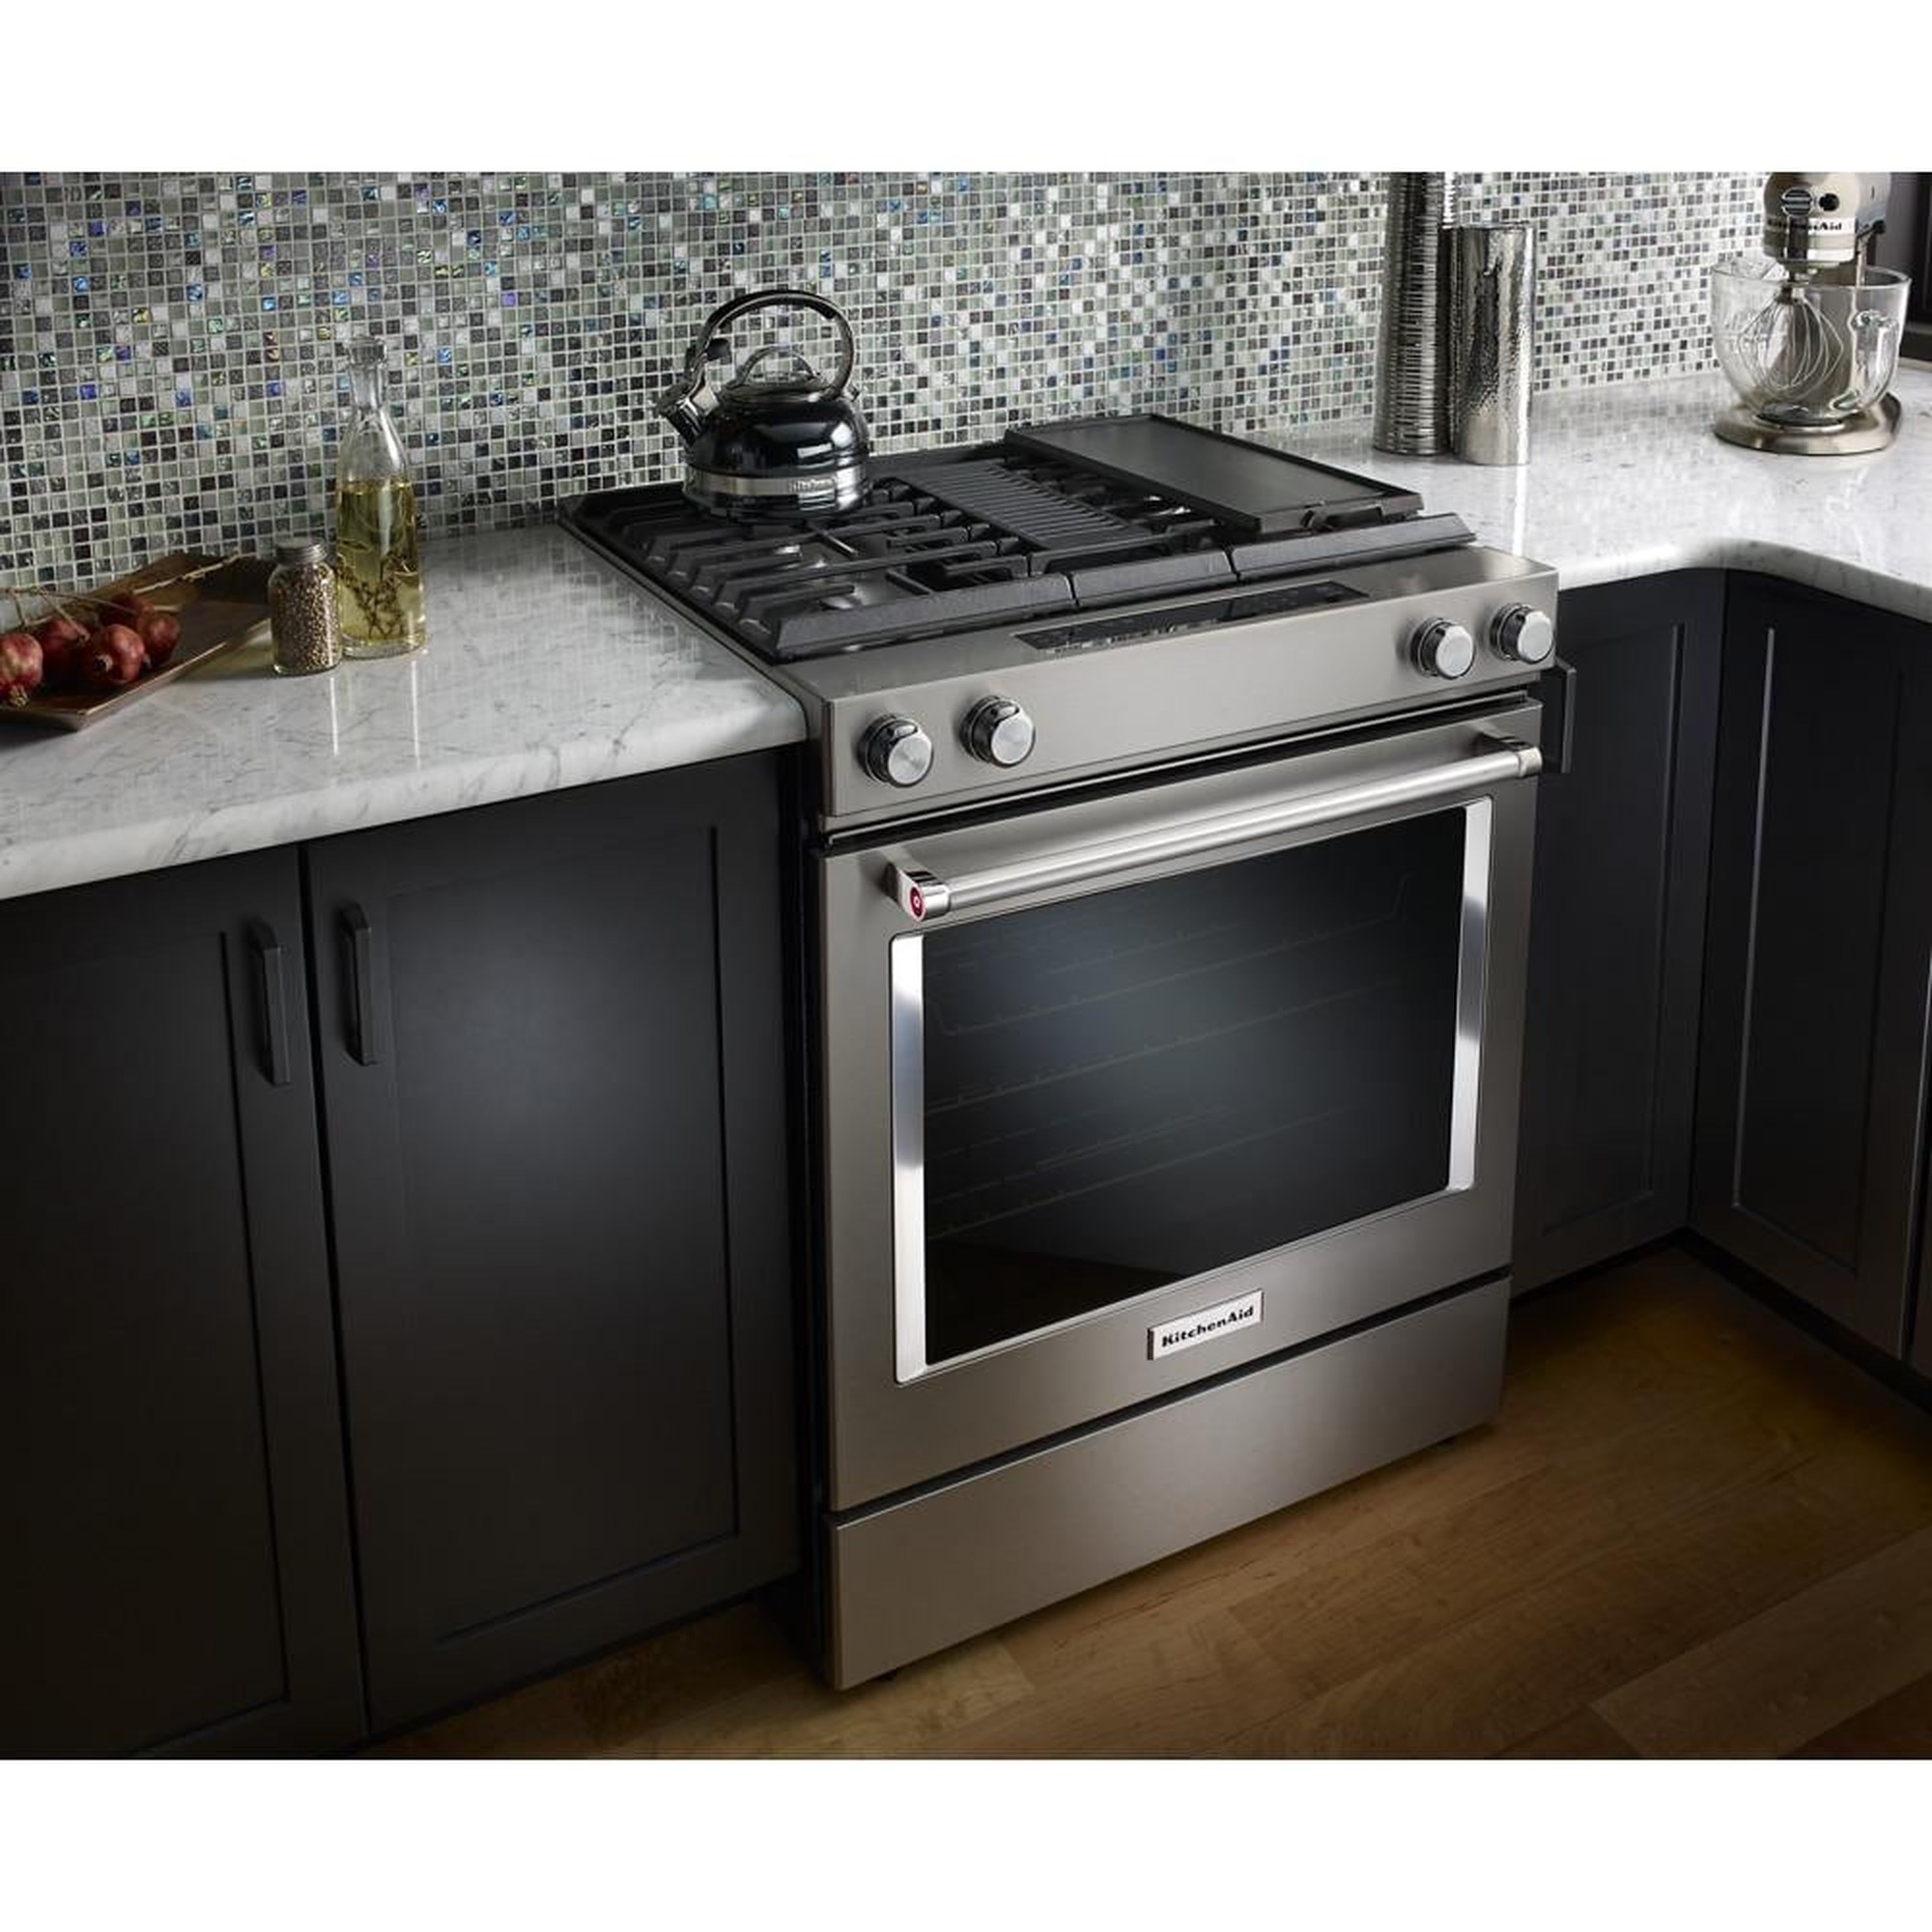 KitchenAid KFGD500ESS 30-Inch 5 Burner Gas Double Oven Convection Range, Simon's Furniture